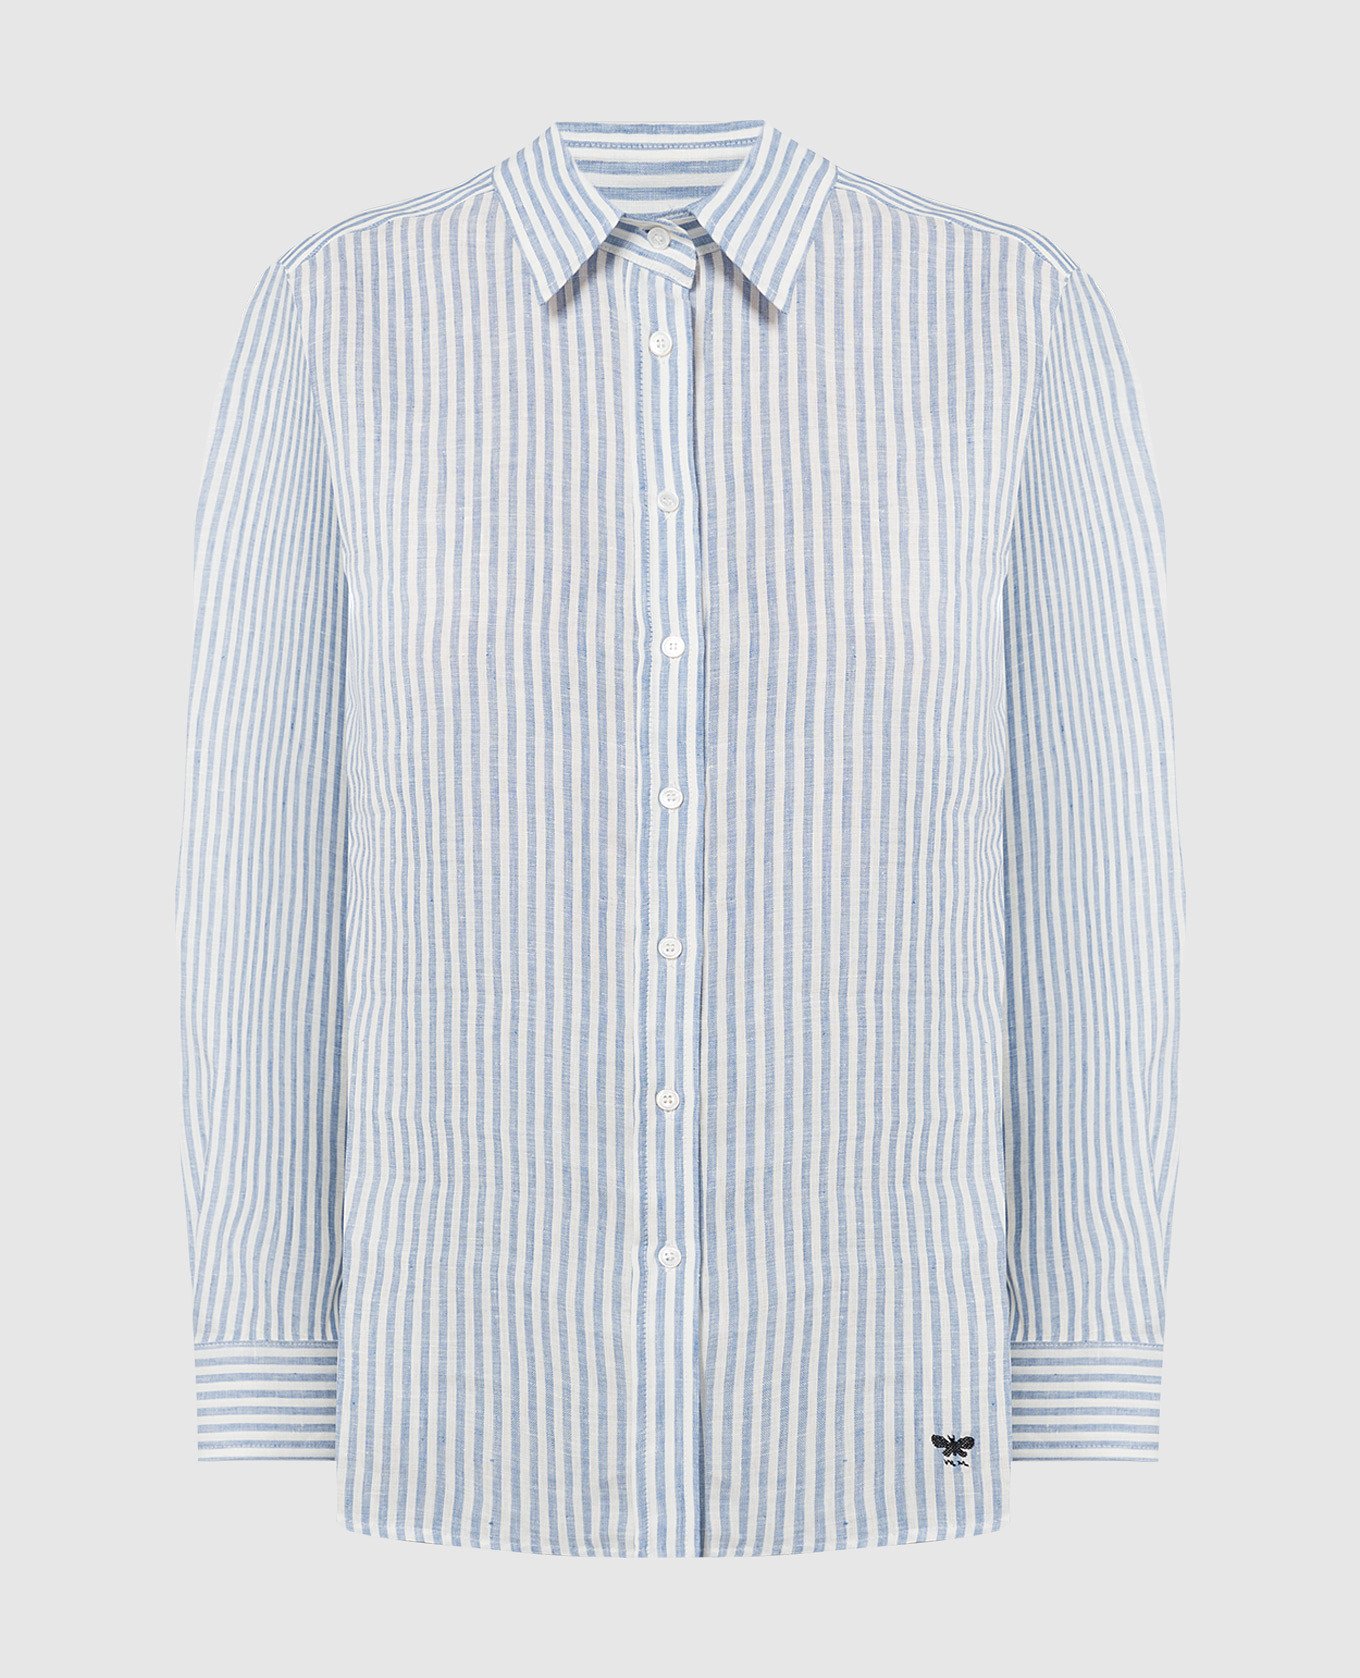 LARI blue striped linen shirt